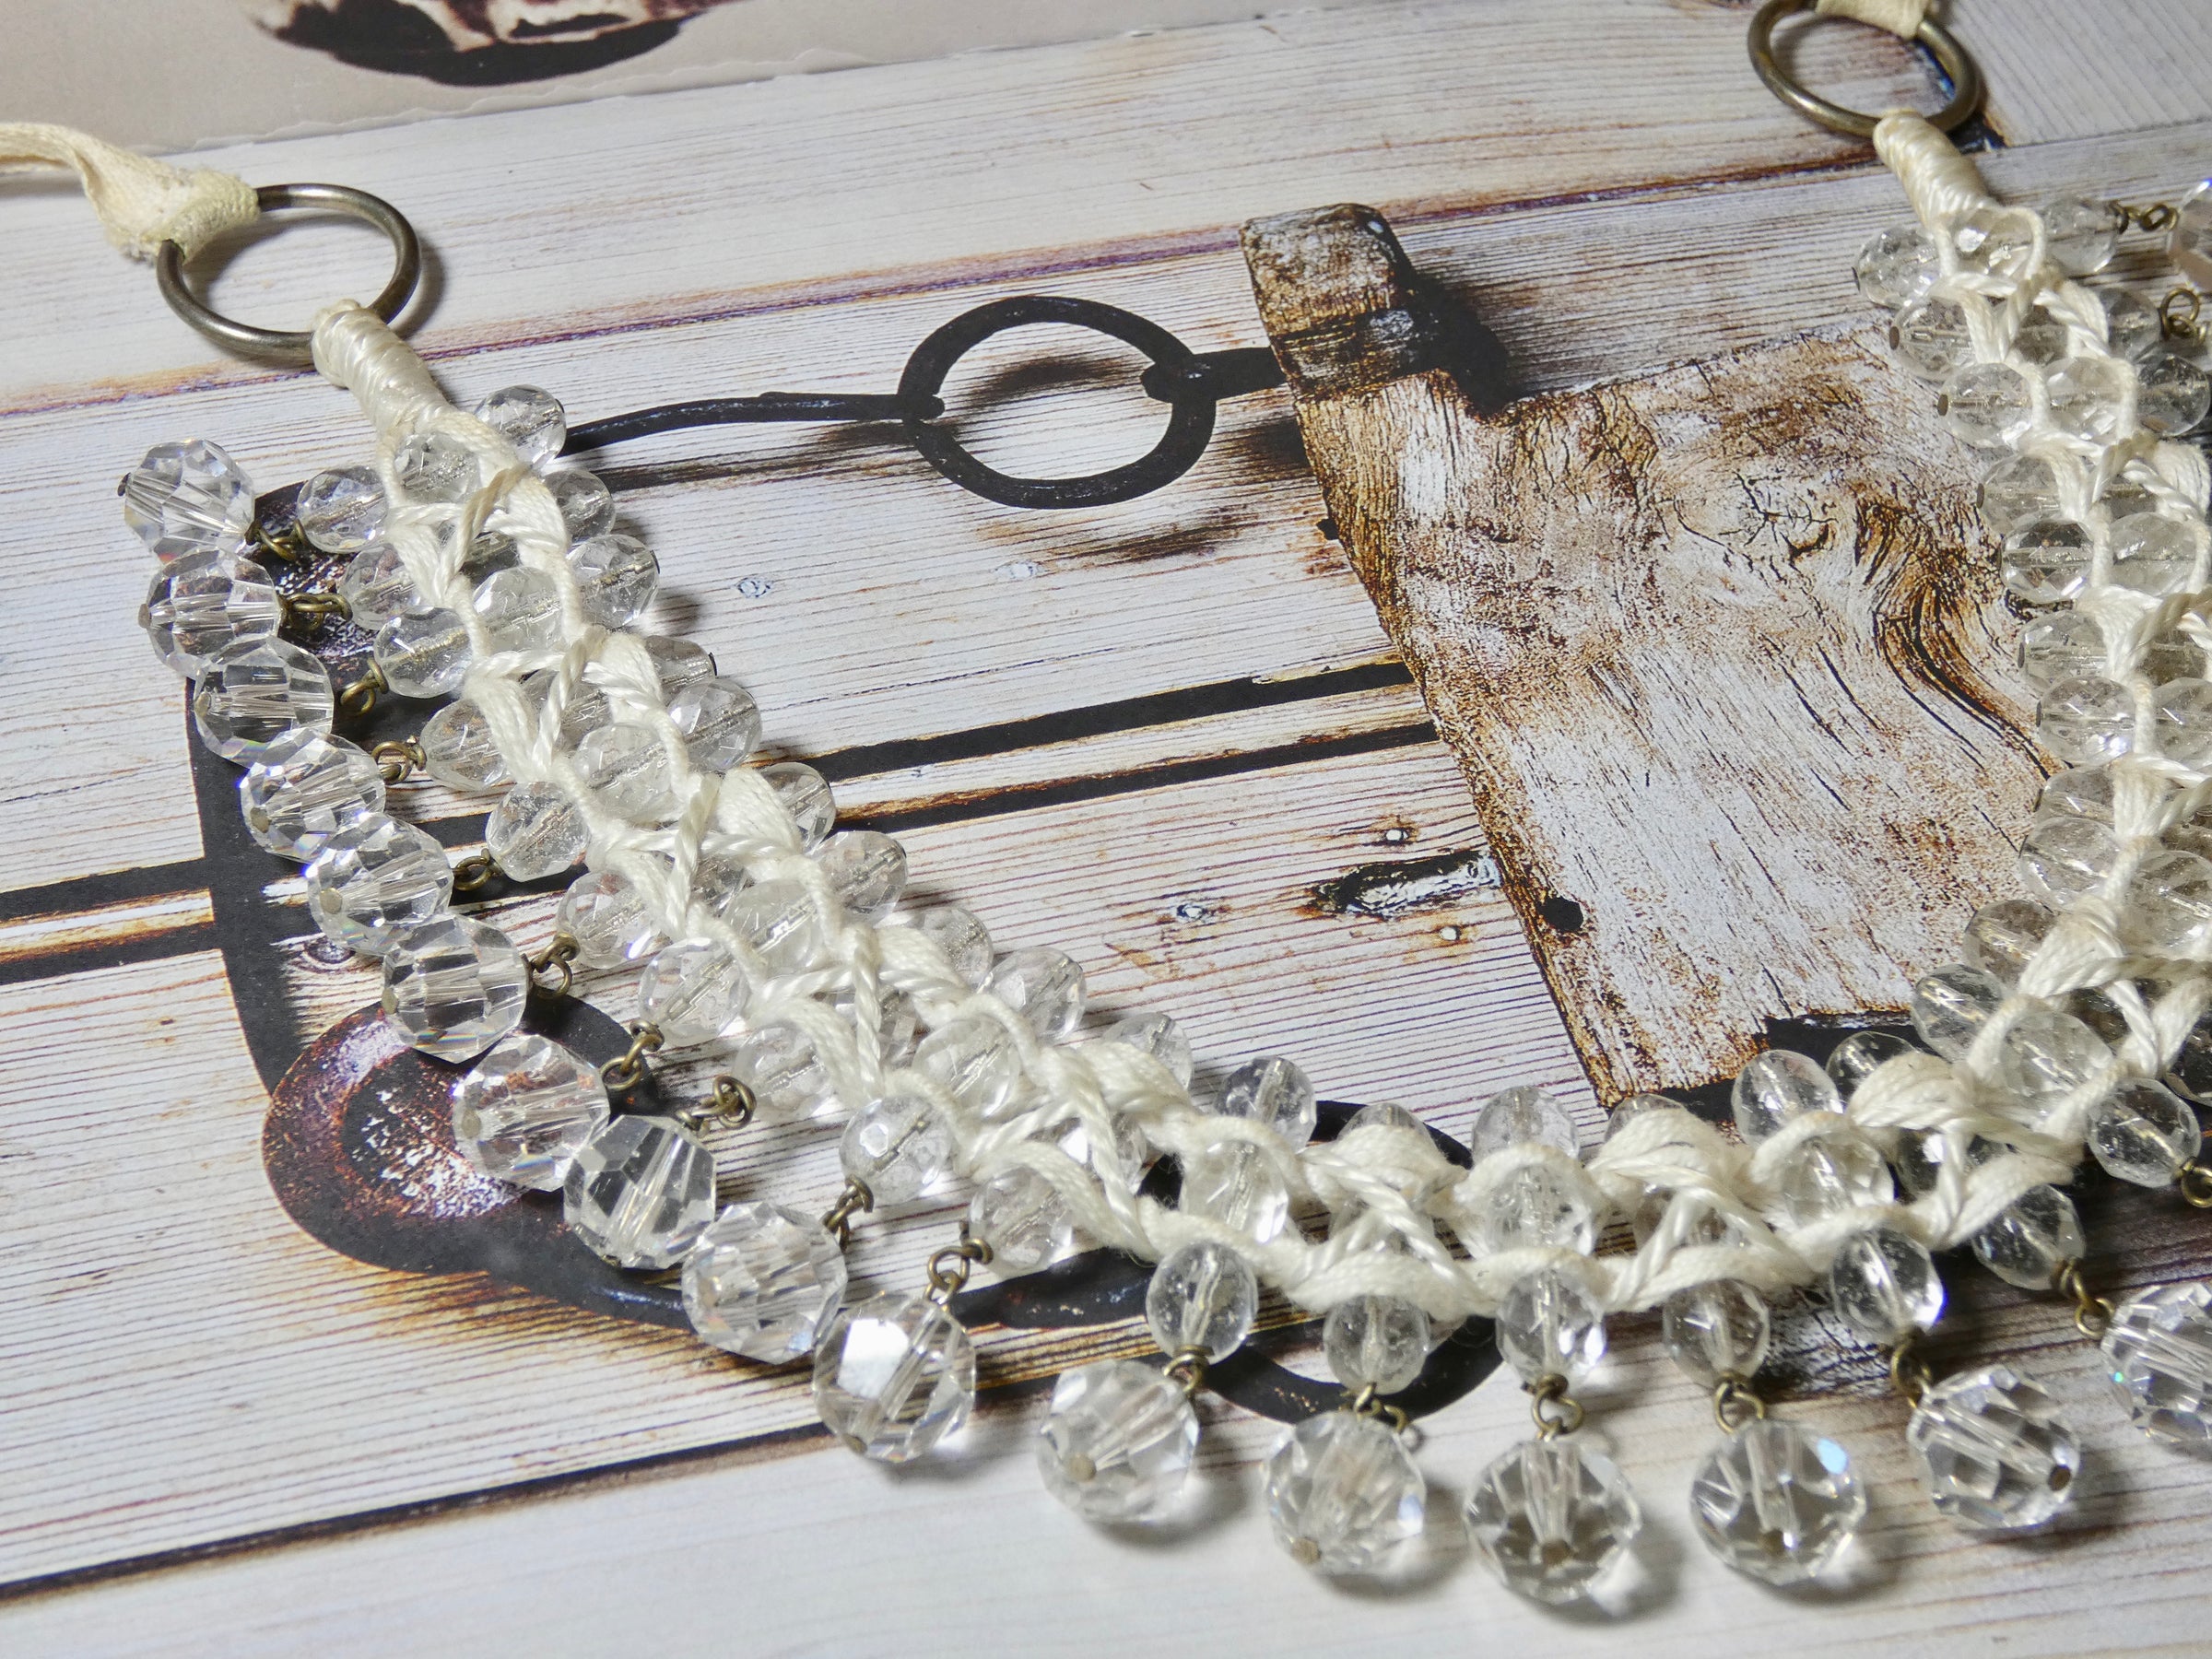 Vintage Crystal Necklace, One of a Kind rare piece, Belt or Necklace